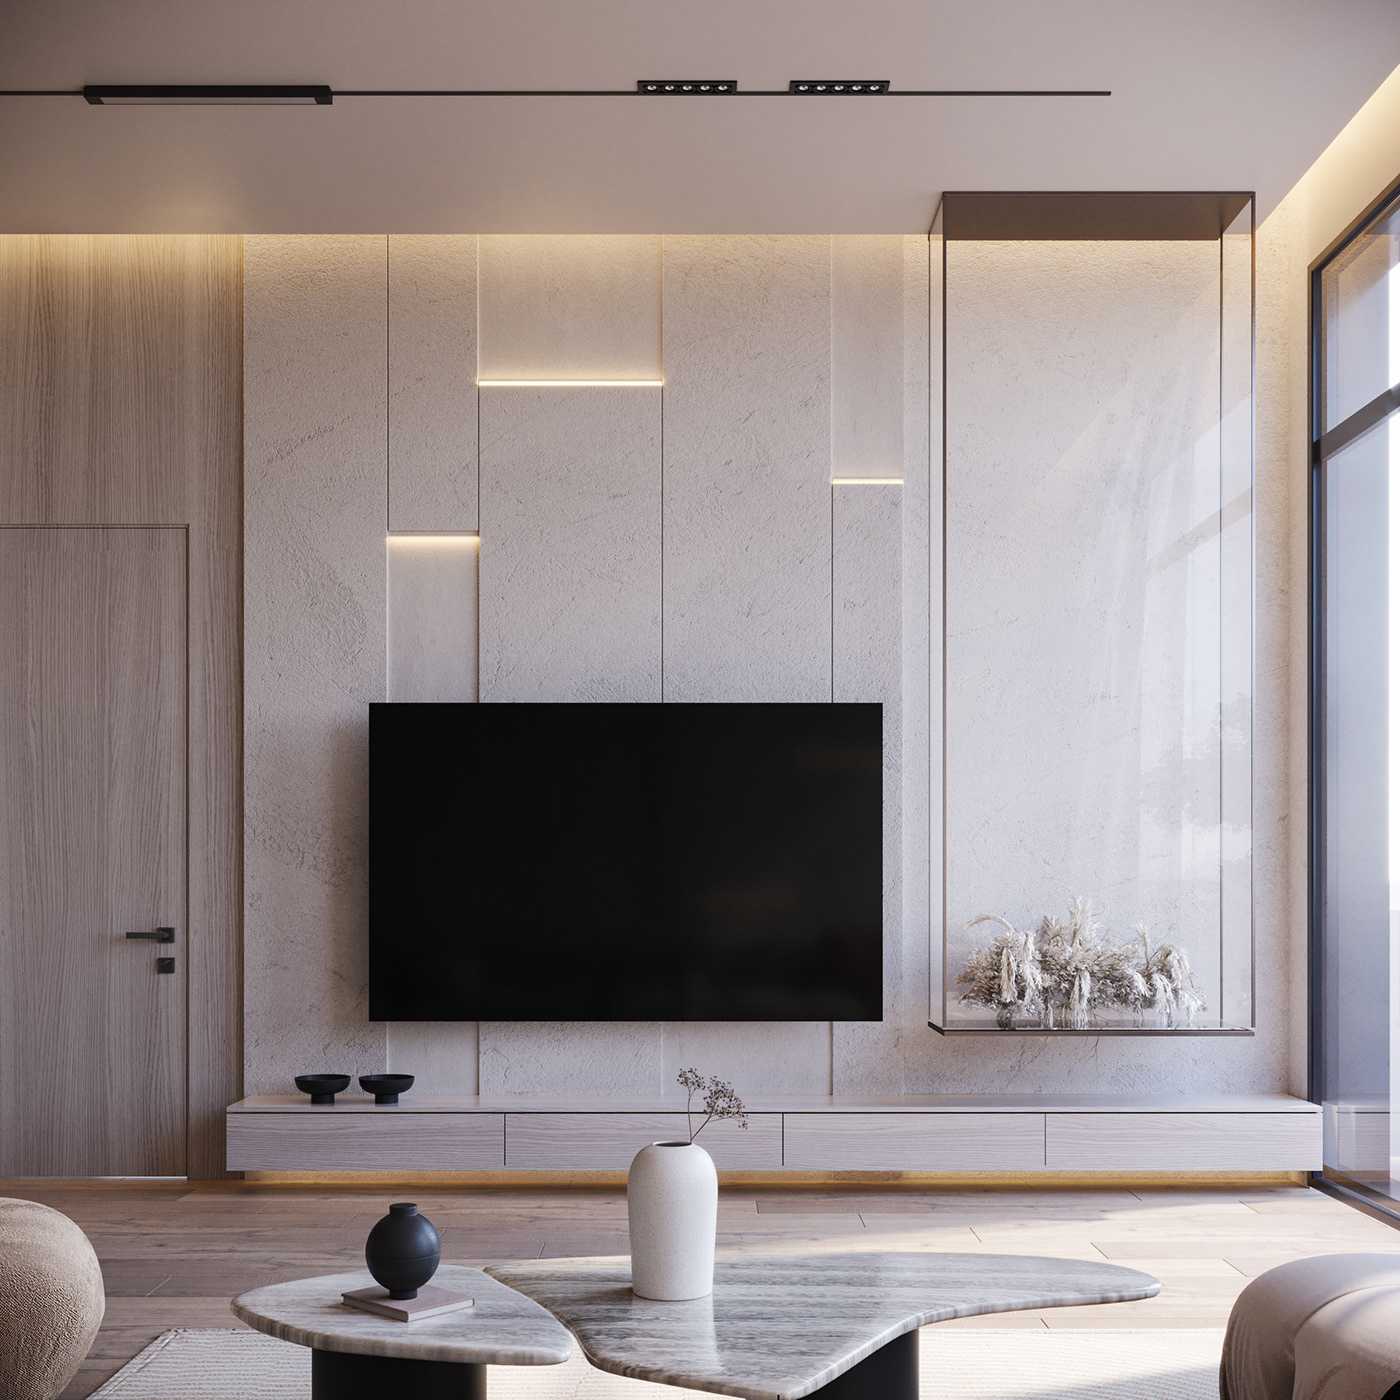 minimal minimalist modern living room тв stairs Staircase coffee corner Family area design